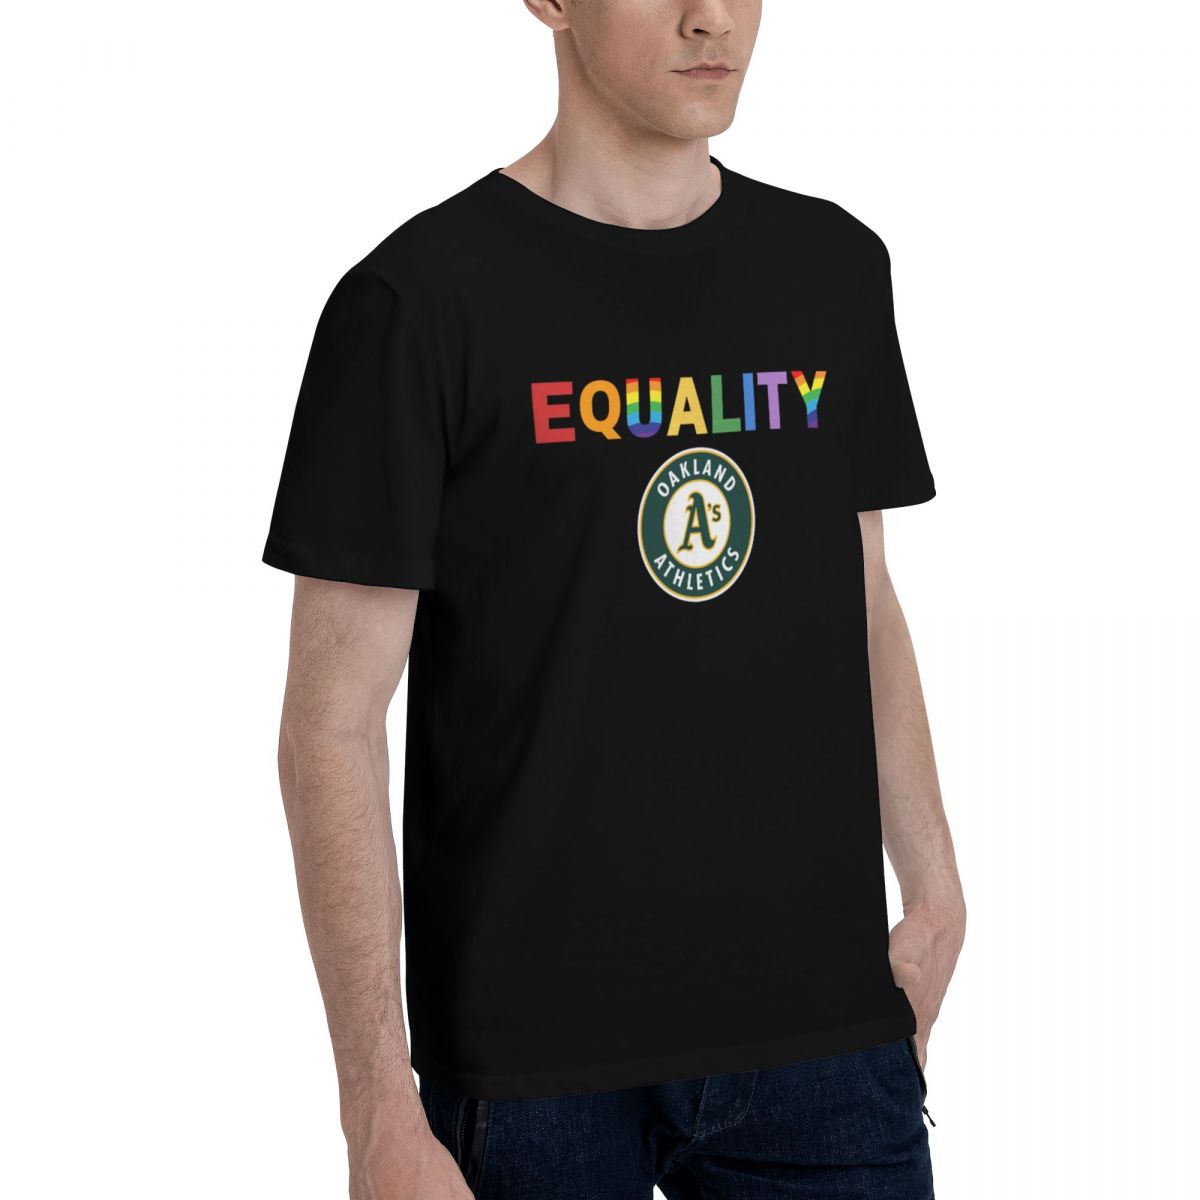 Oakland Athletics Rainbow Equality Pride Cotton T-Shirt Men's